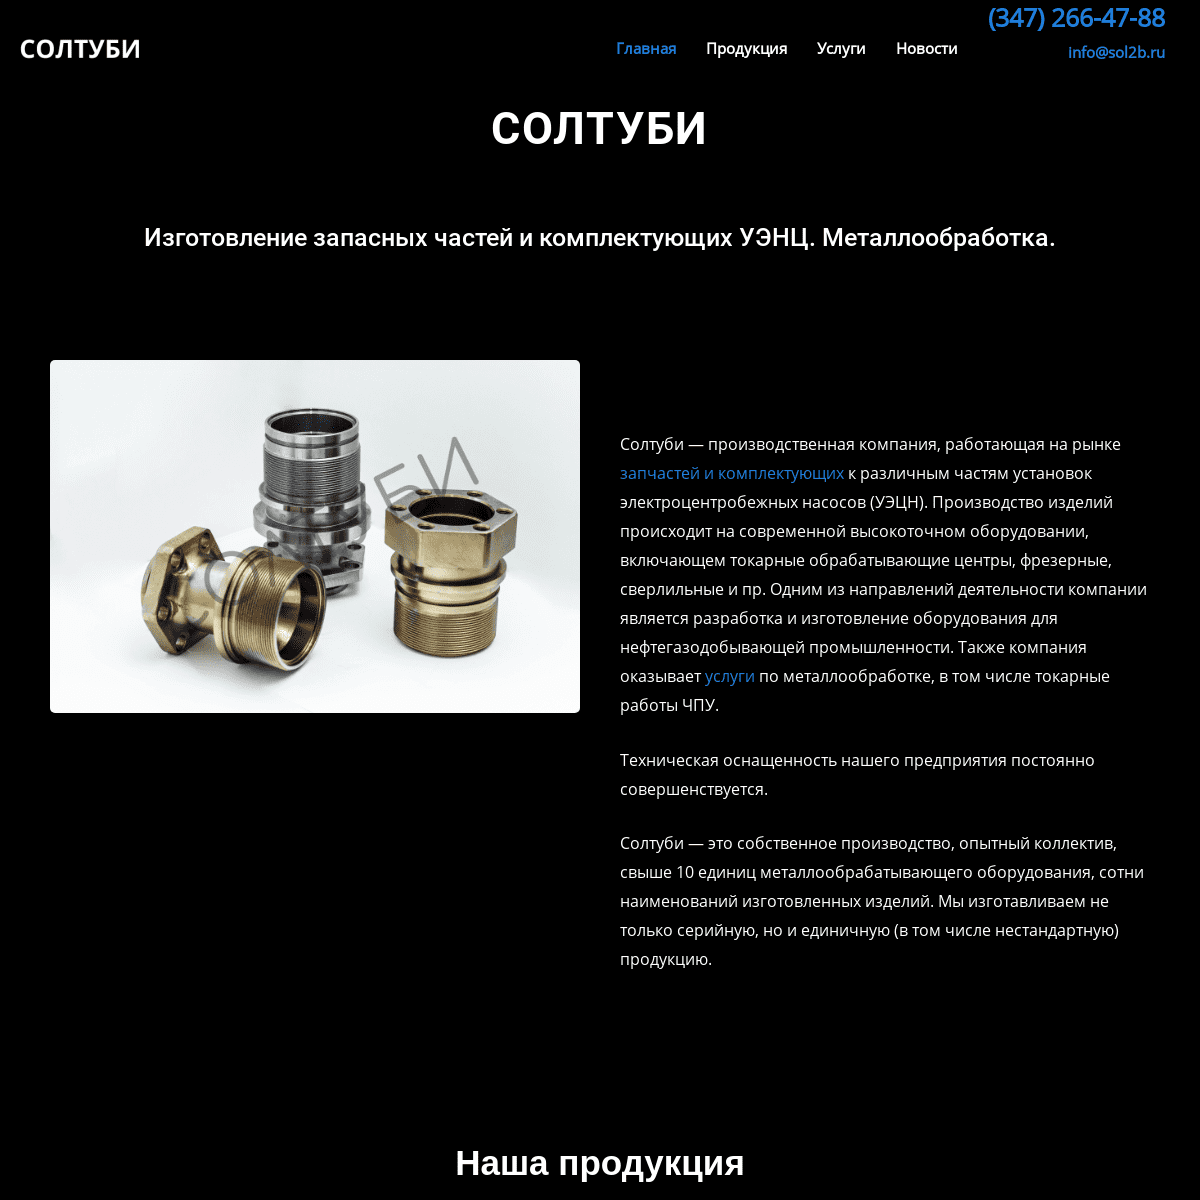 A complete backup of https://sol2b.ru